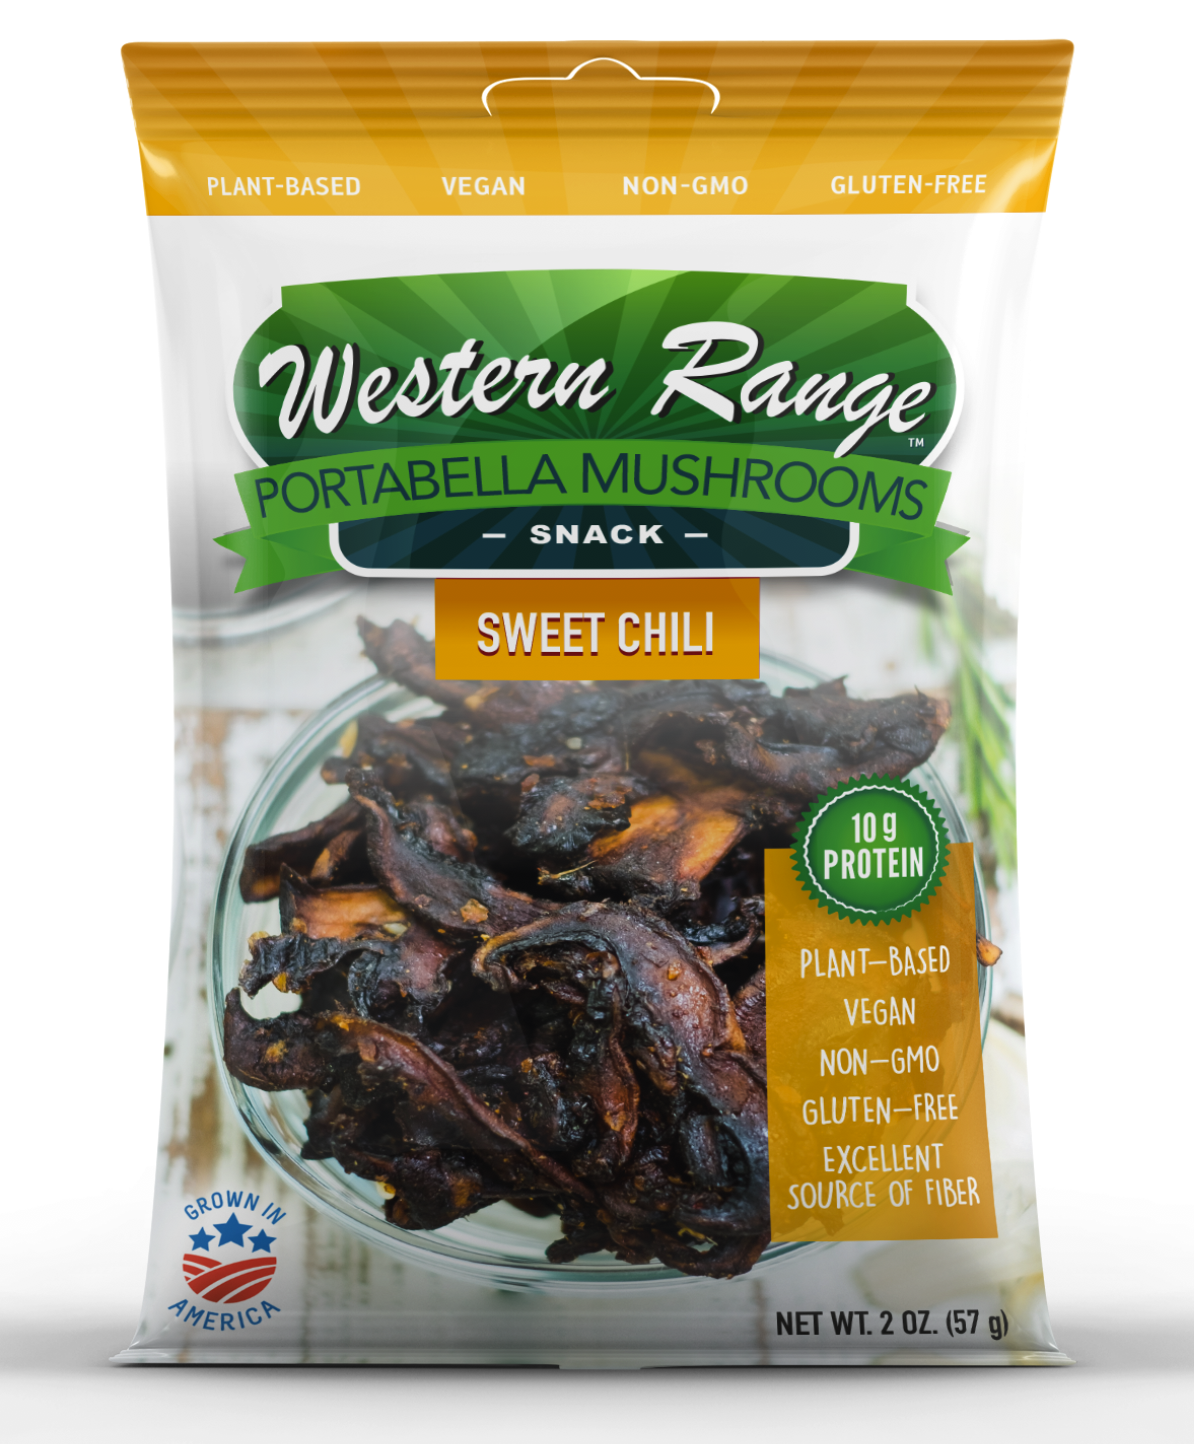 Western Range Portabella Mushroom Snack - Sweet Chili 12 units per case 2.0 oz